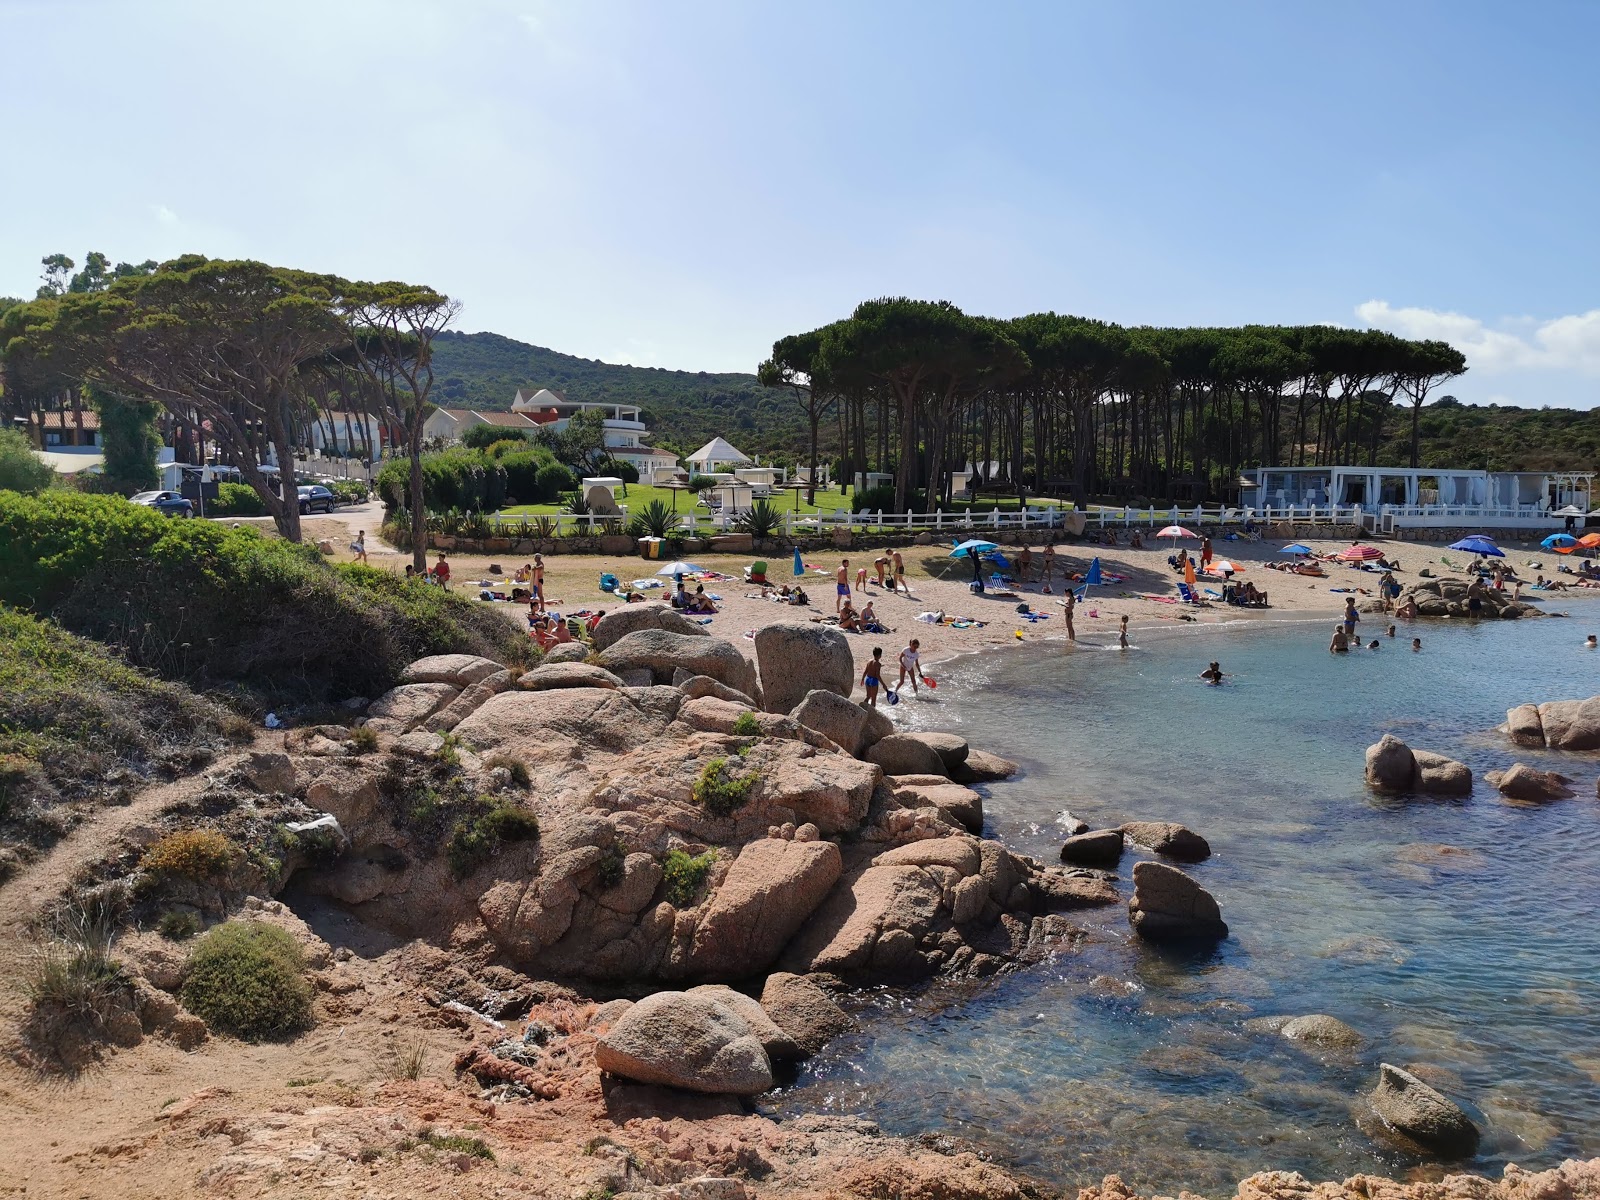 Spiaggia Conca Verde的照片 具有部分干净级别的清洁度